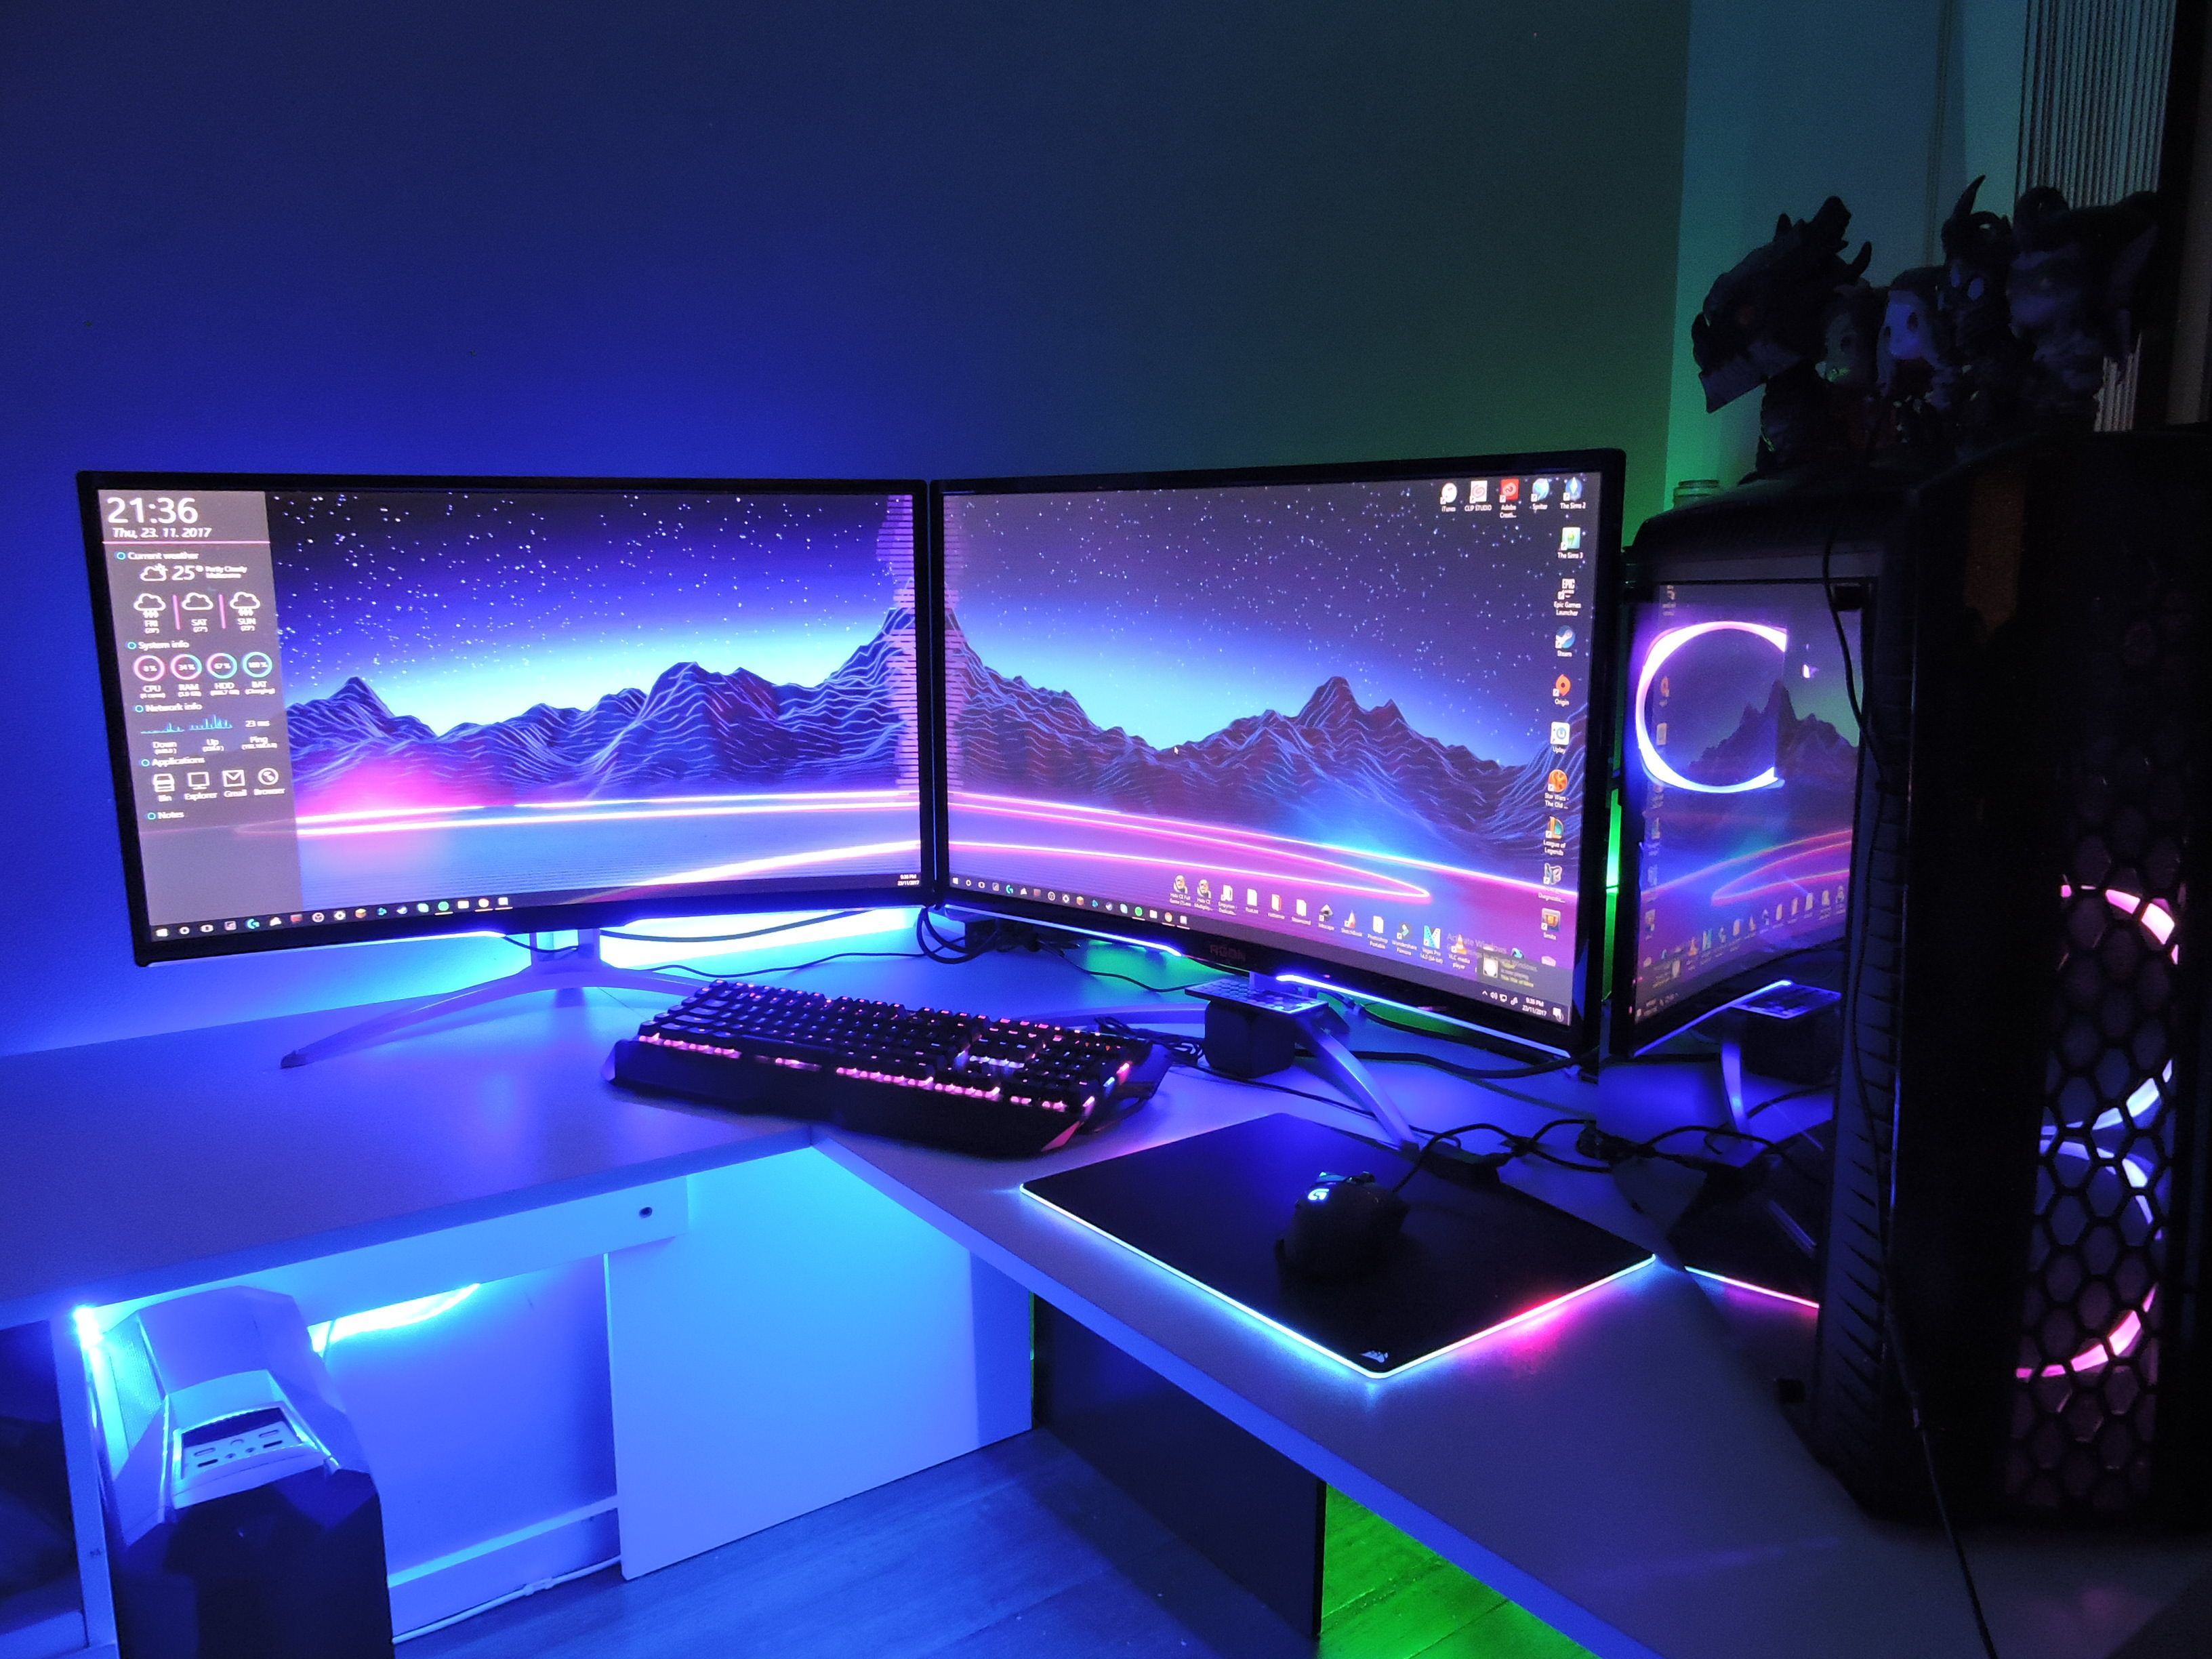 gaming setup wallpaper,display device,computer monitor,desktop computer,technology,lighting